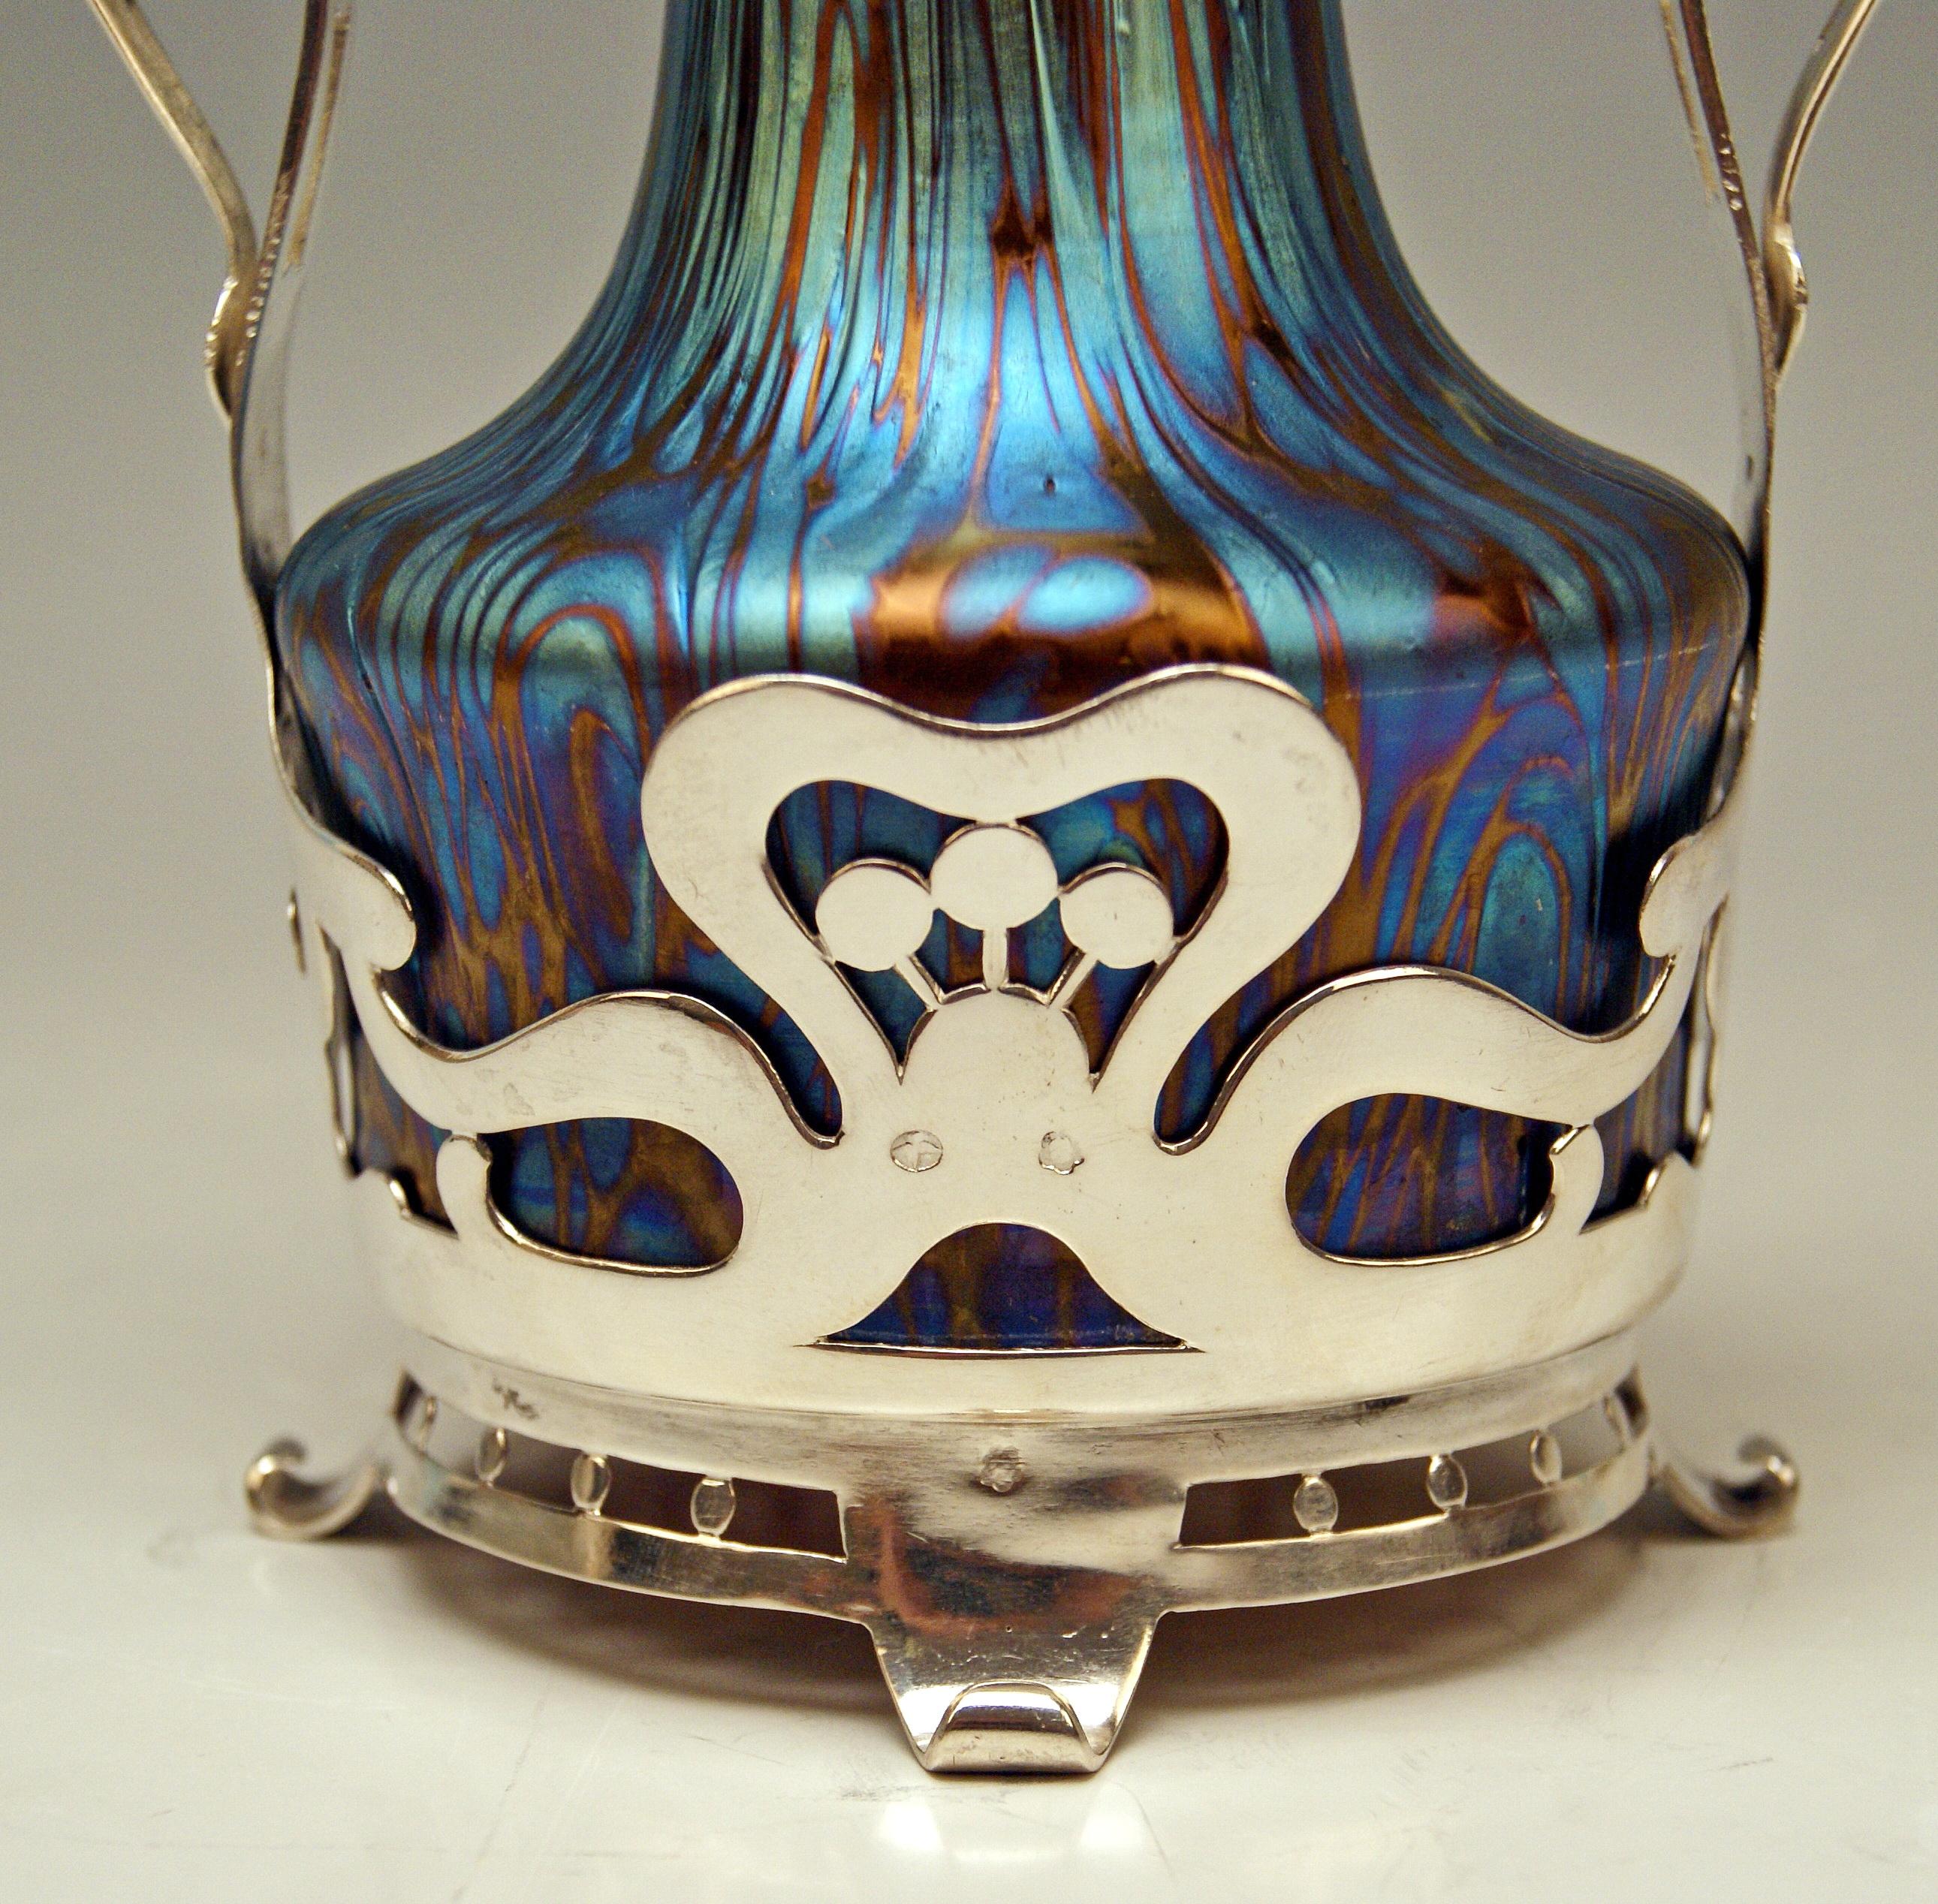 Austrian Vase Loetz Widow 85-3693 for Bakalowits PG 7766 Blue Vienna Silver Mounting 1900